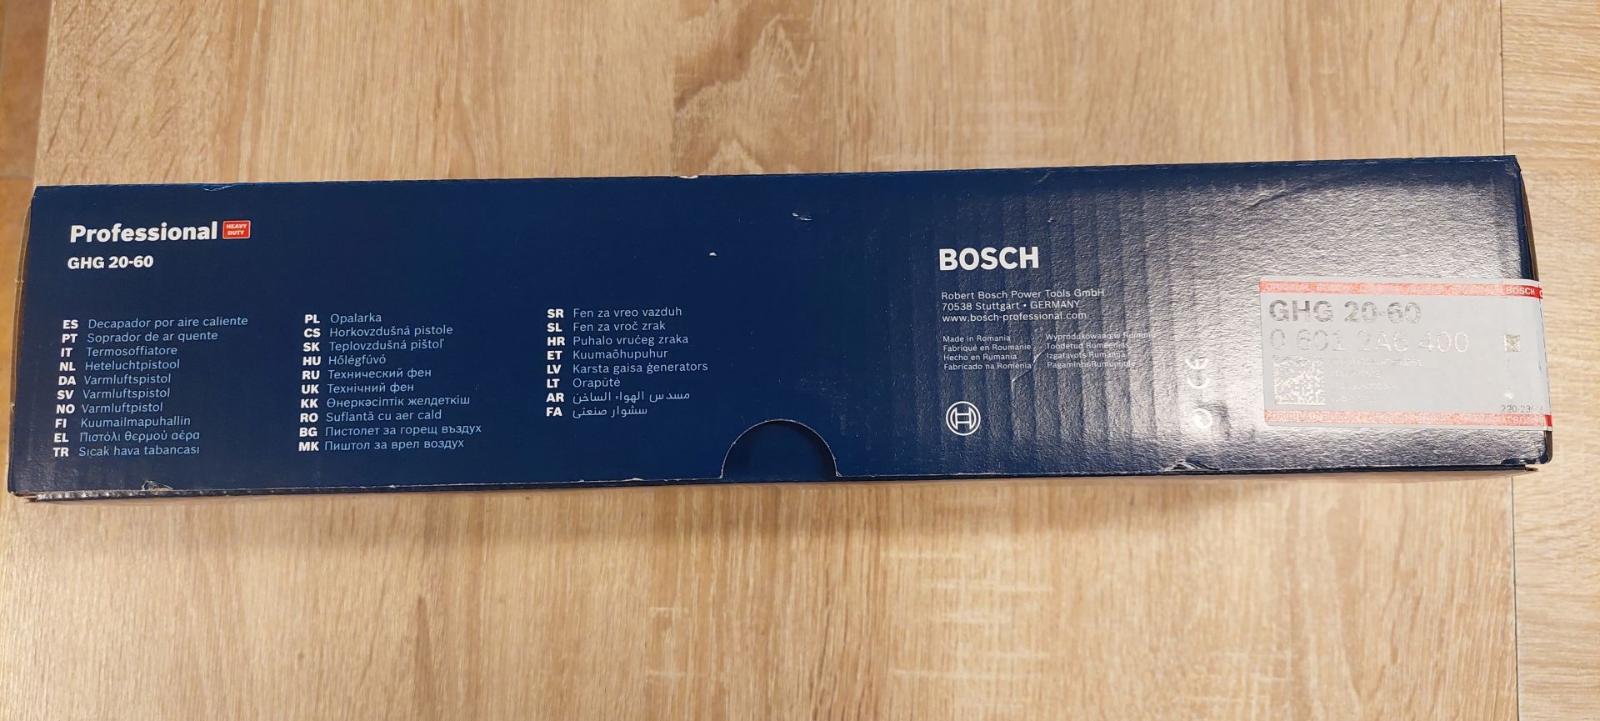 Decapador de aire caliente Bosch GHG 20-60 Professional